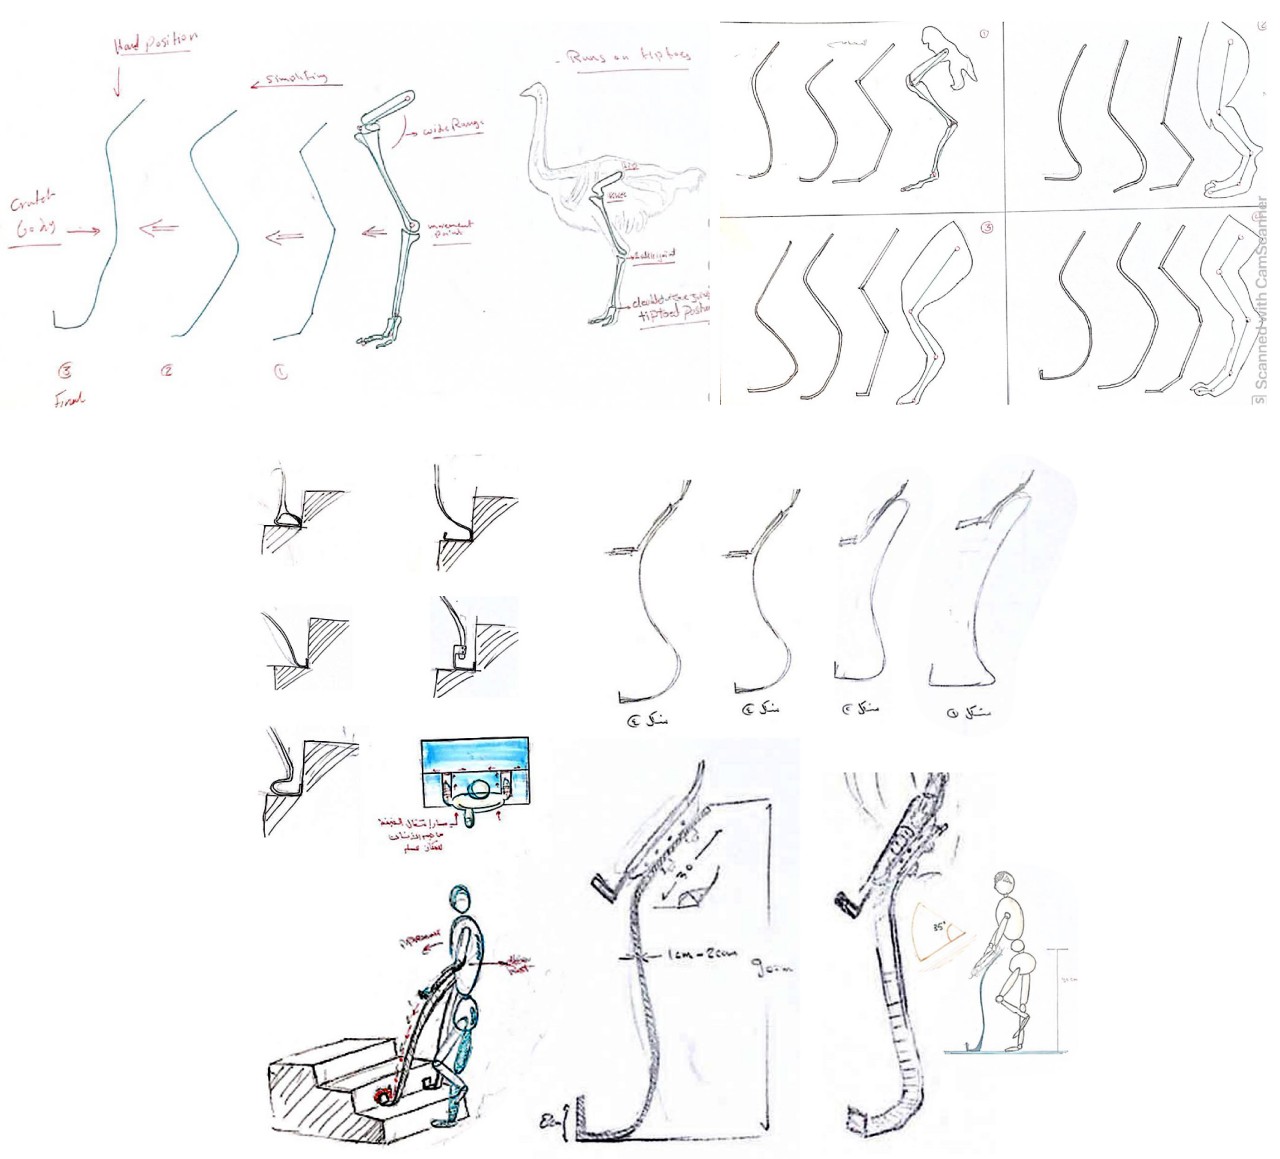 Lightweight crutch concept takes inspiration from a flightless but fast bird